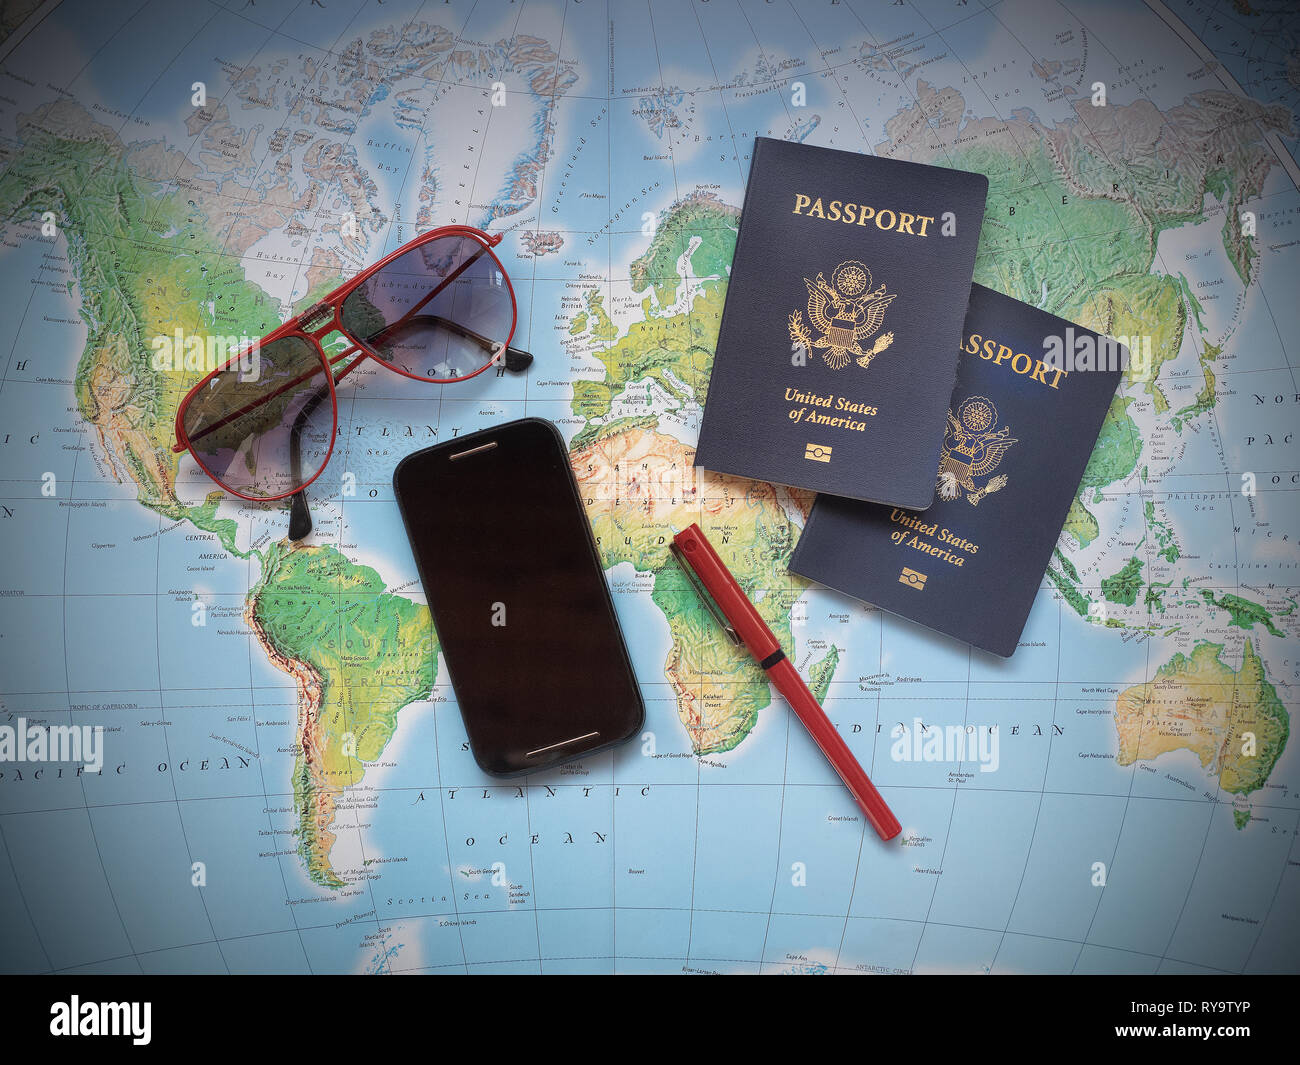 Passports on vacation travel map Stock Photo